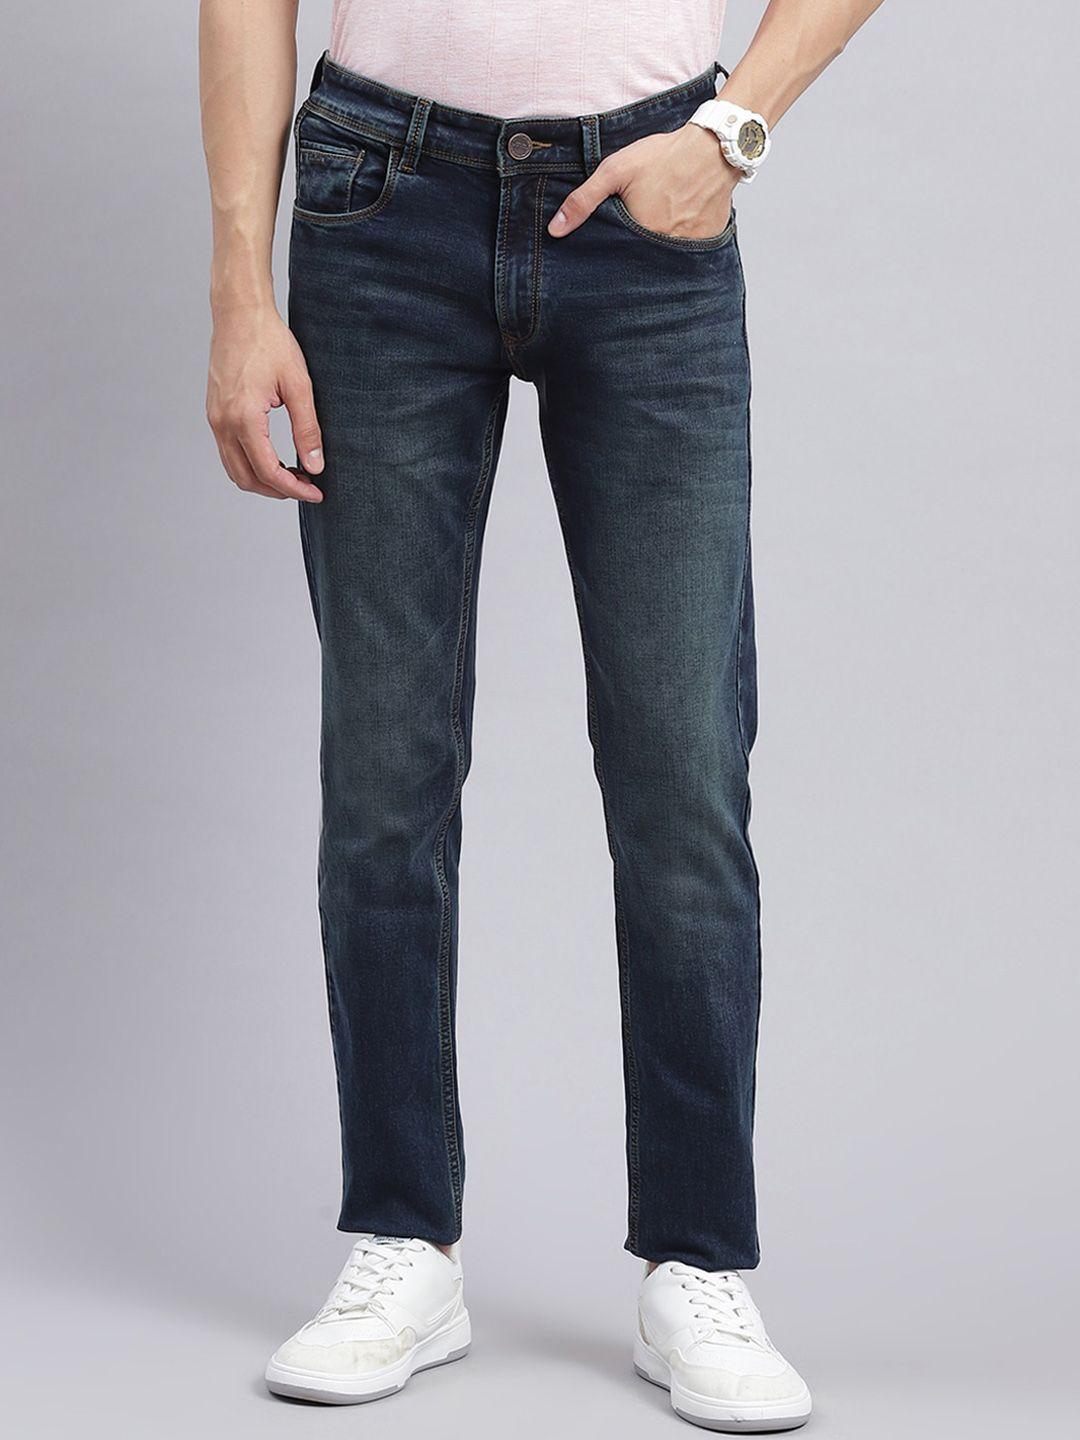 monte-carlo-men-smart-mid-rise-slim-fit-heavy-fade-jeans